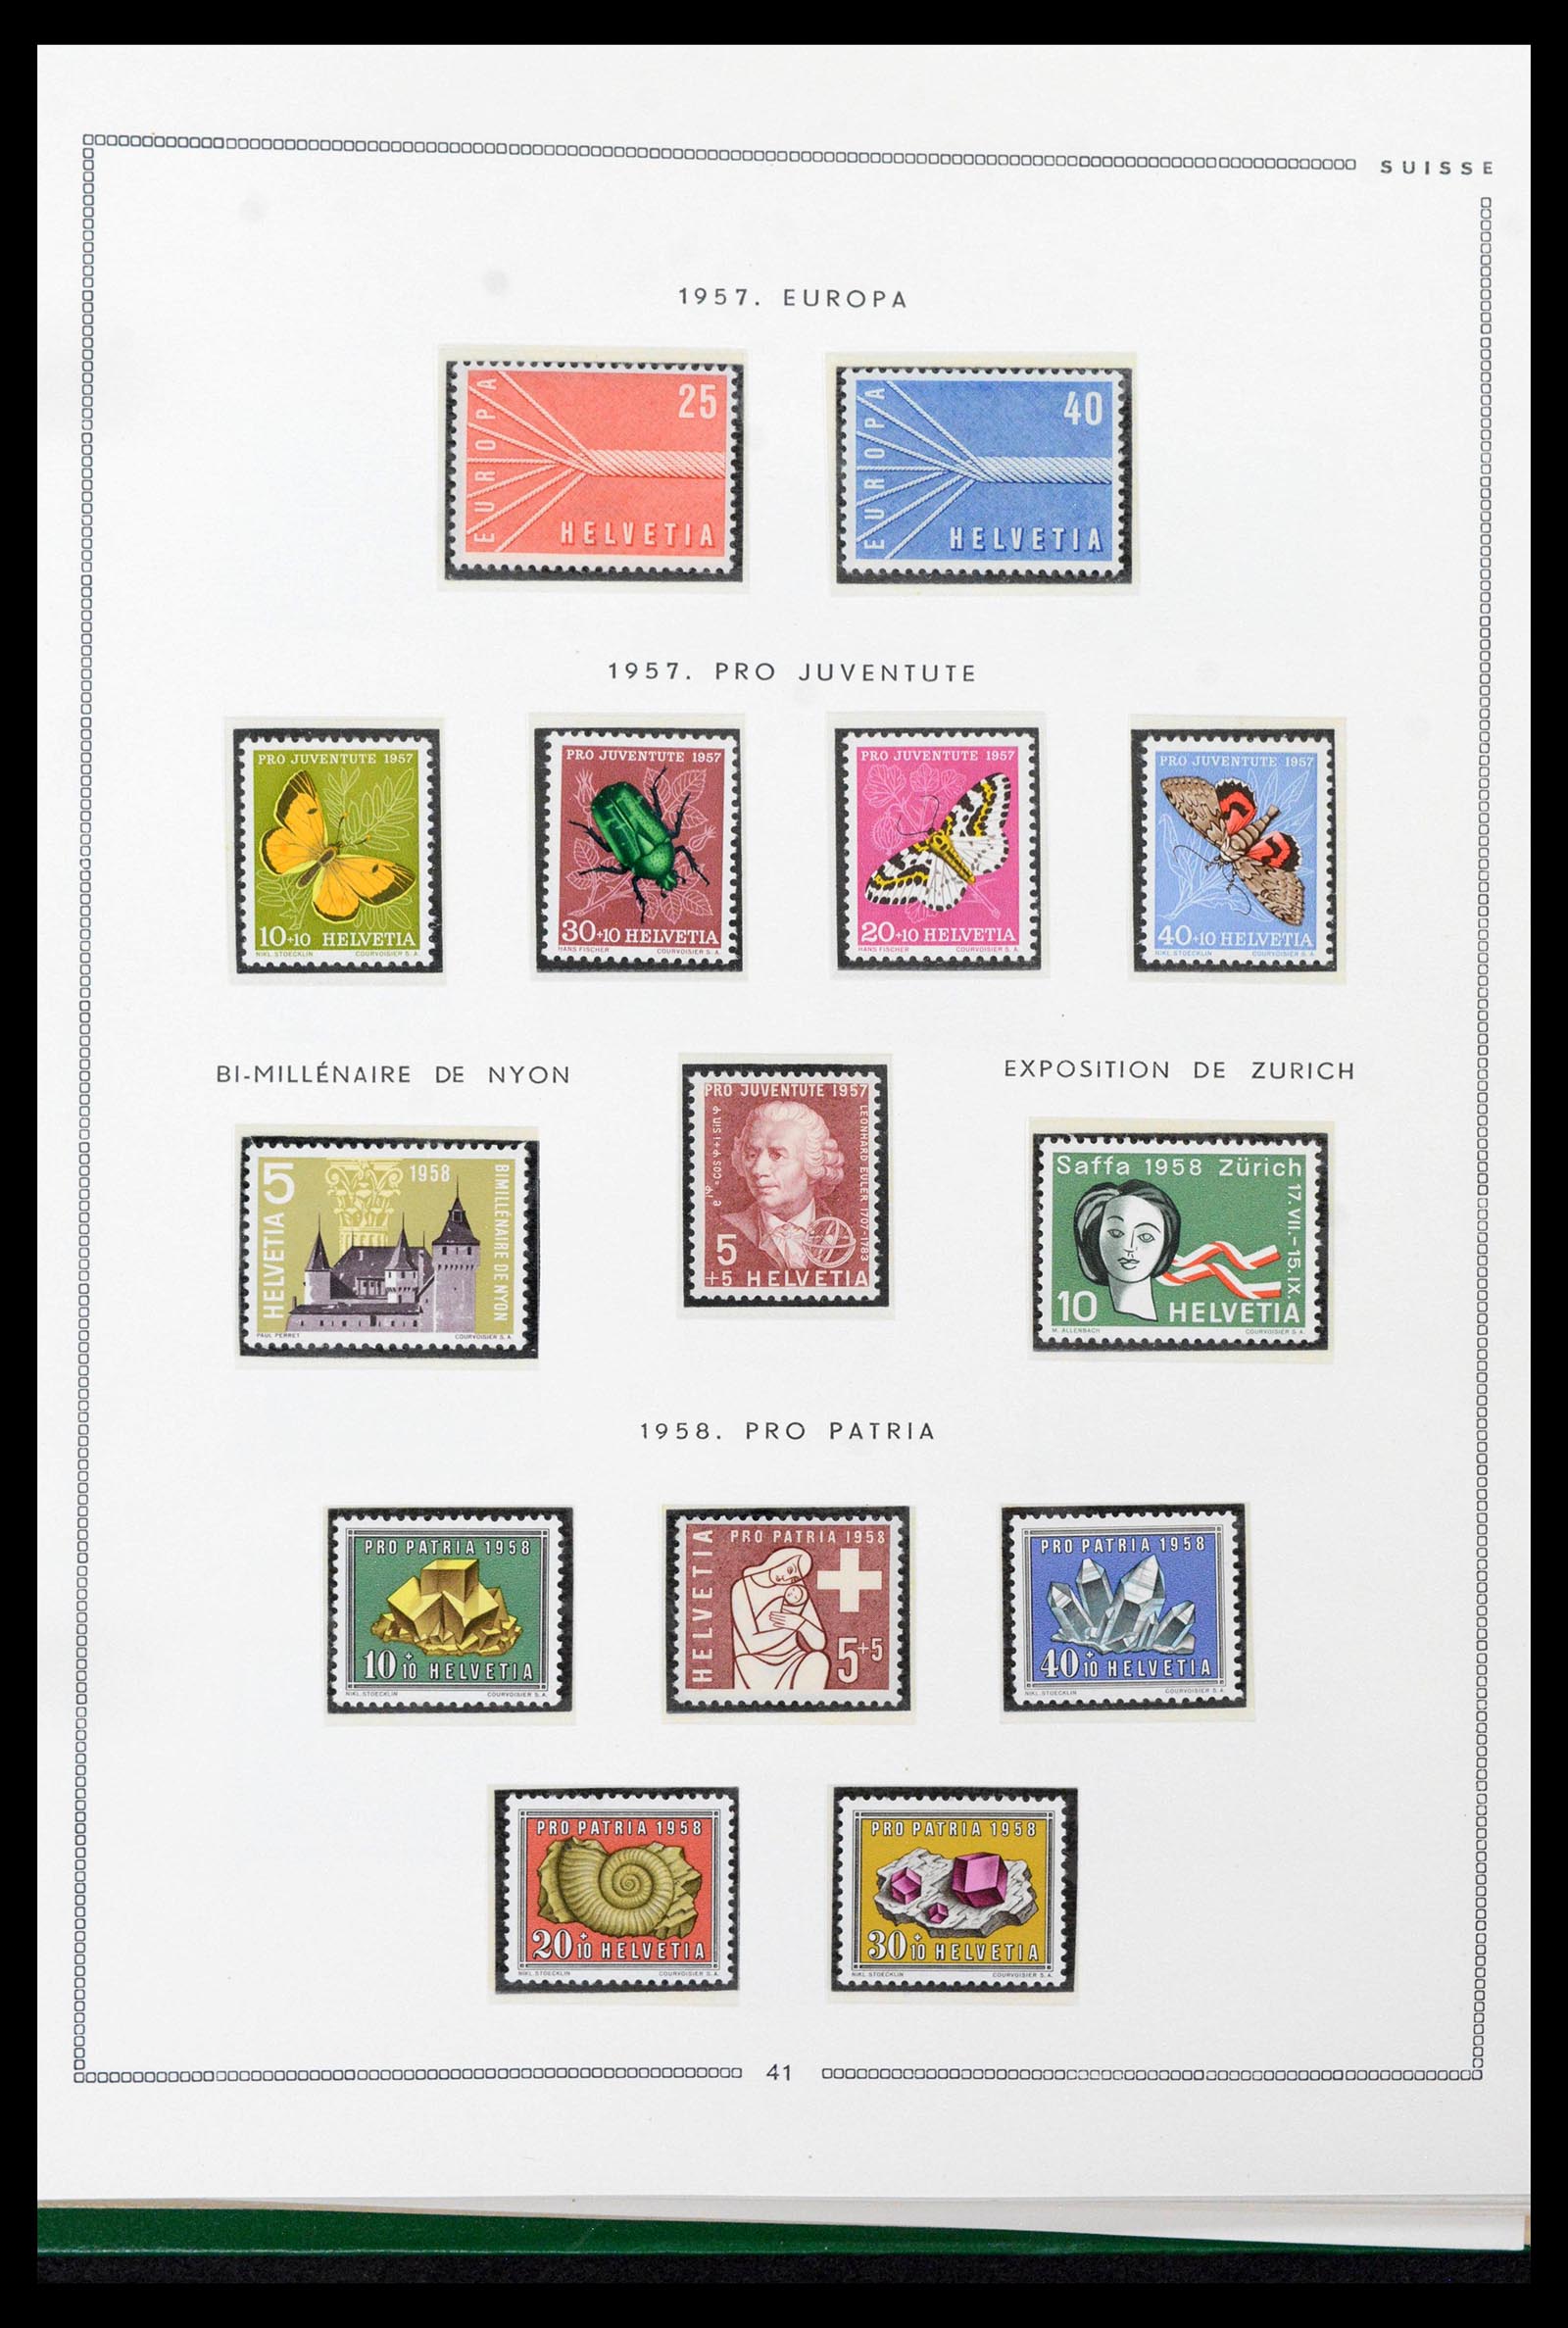 39096 0036 - Stamp collection 39096 Switzerland 1907-1963.